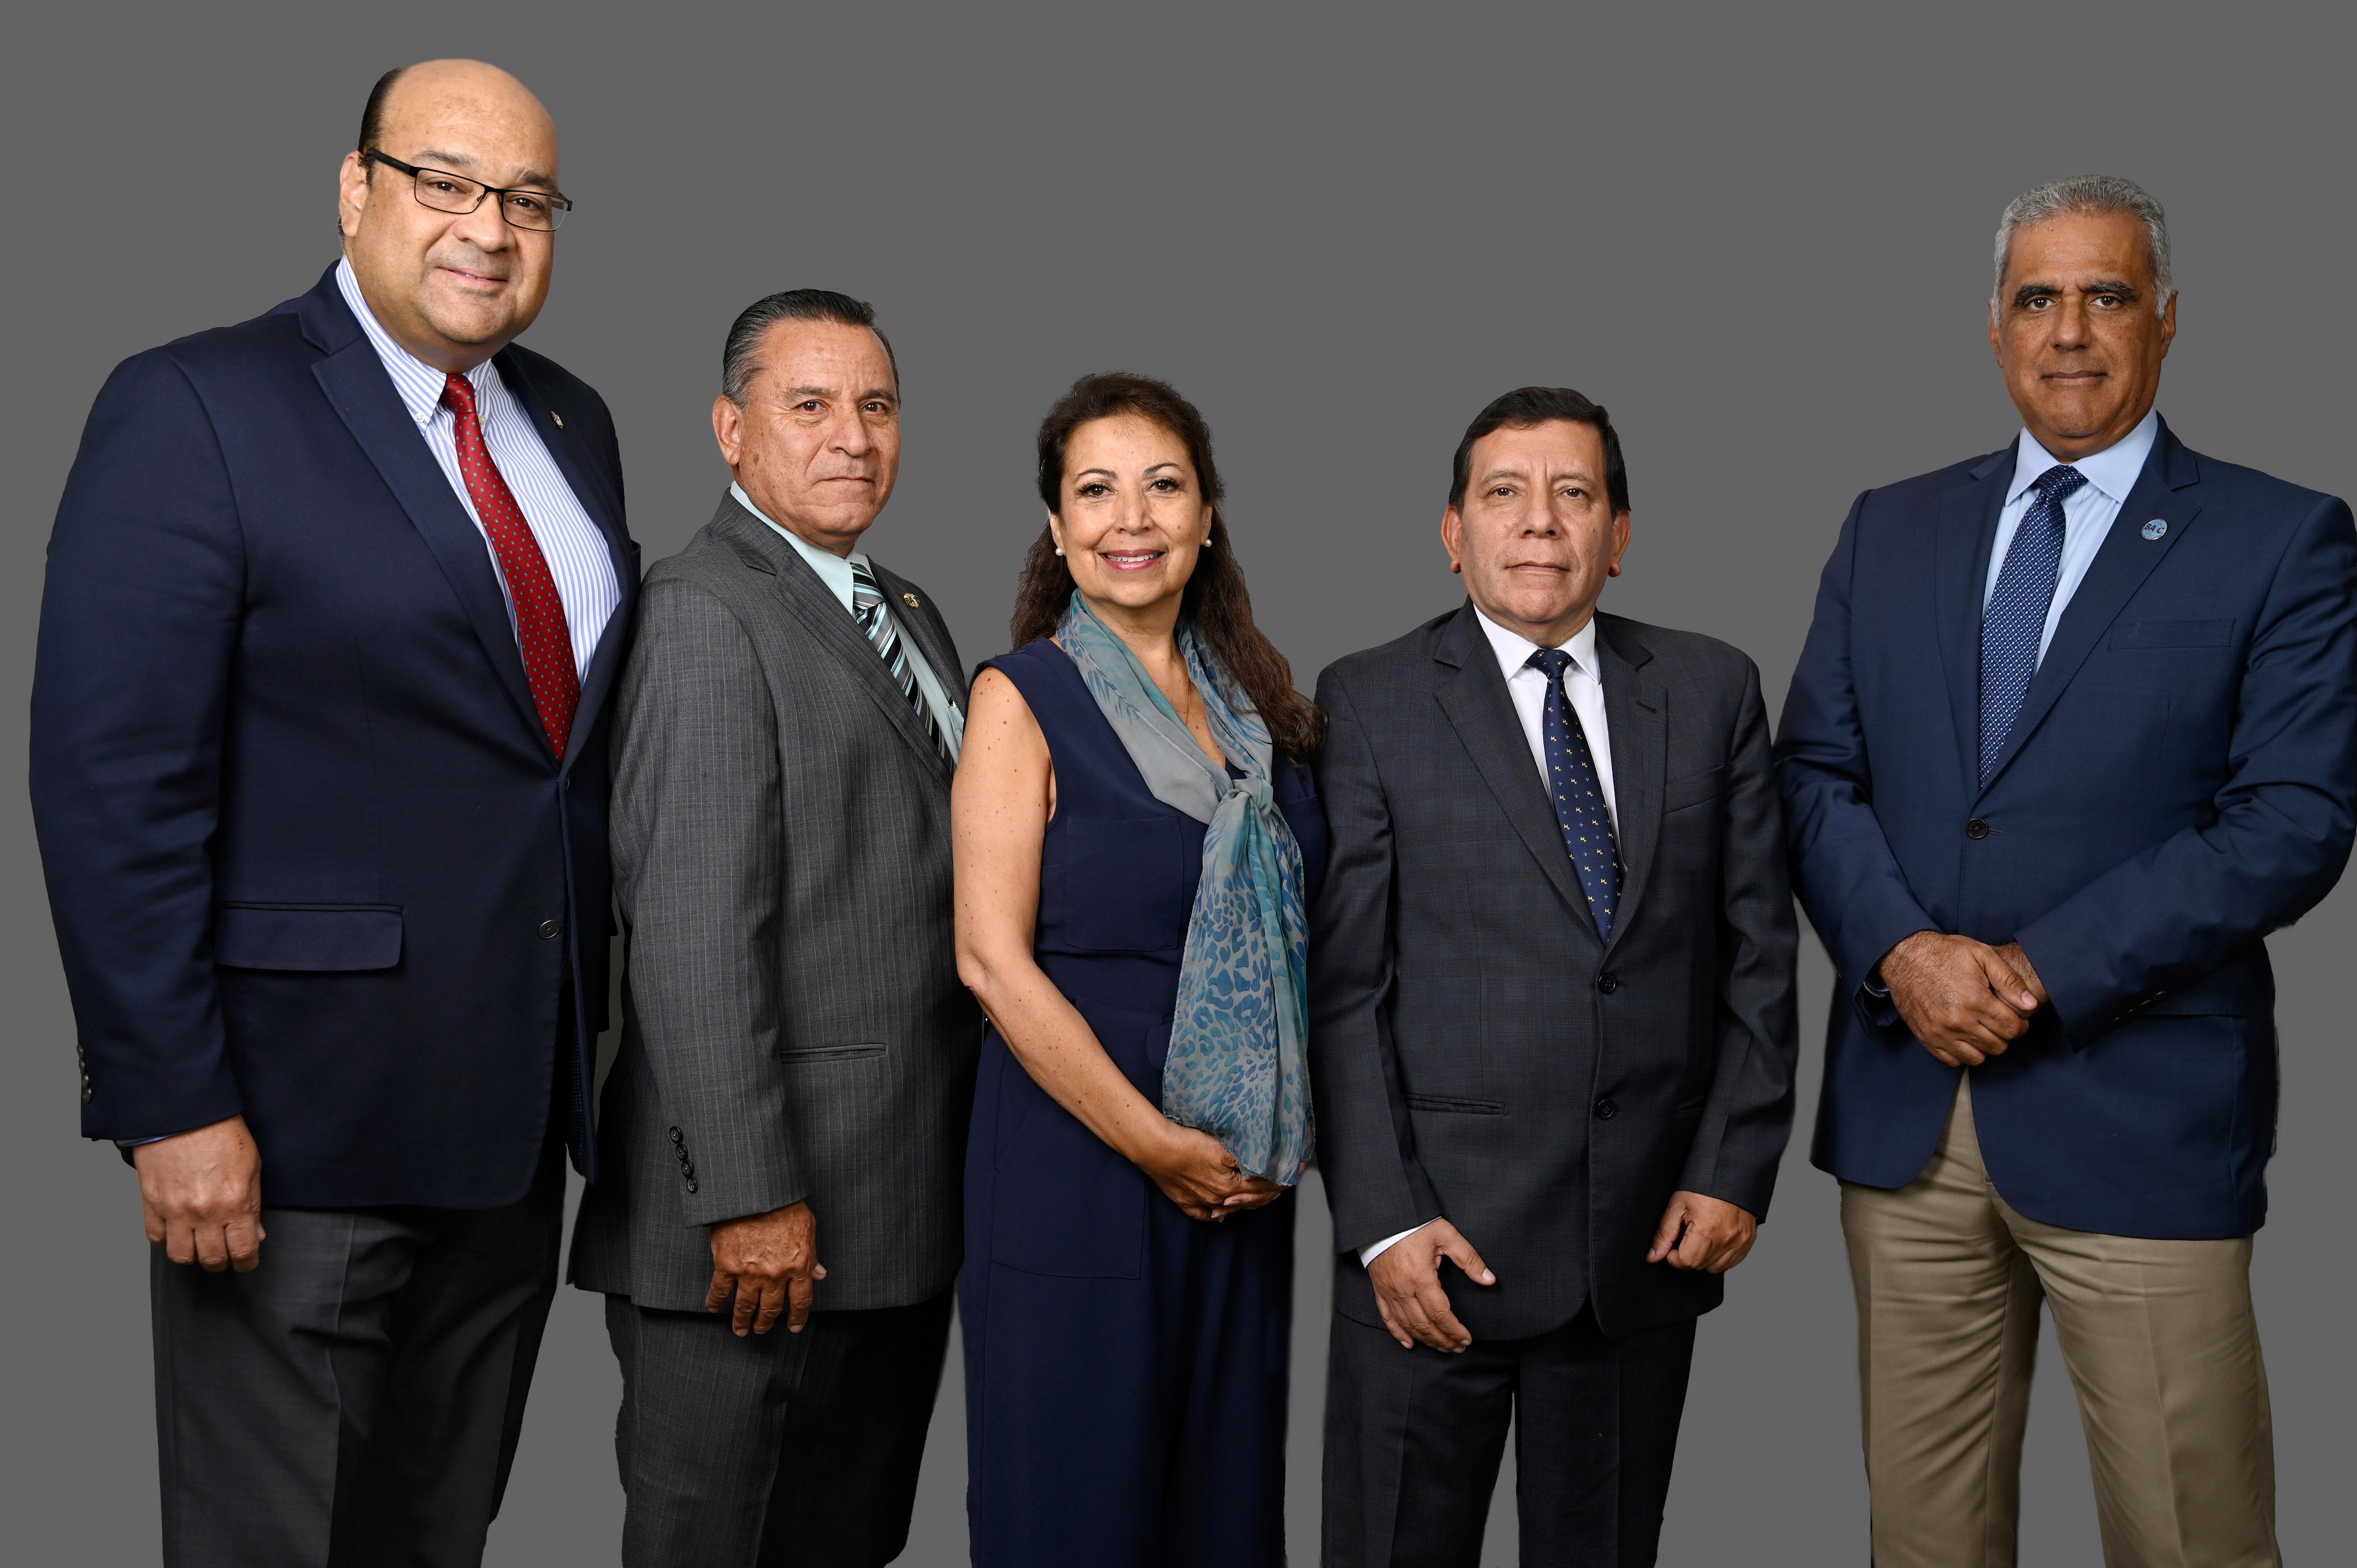 WBO Board of Directors - 2019-2023 term. From left to right: Álvaro Alpízar - Costa Rica, Emilio Aguiar - Ecuador, Patricia Siles - Peru, Ricardo Sanabria - Colombia, and Armando Rivas - Dominican Republic.